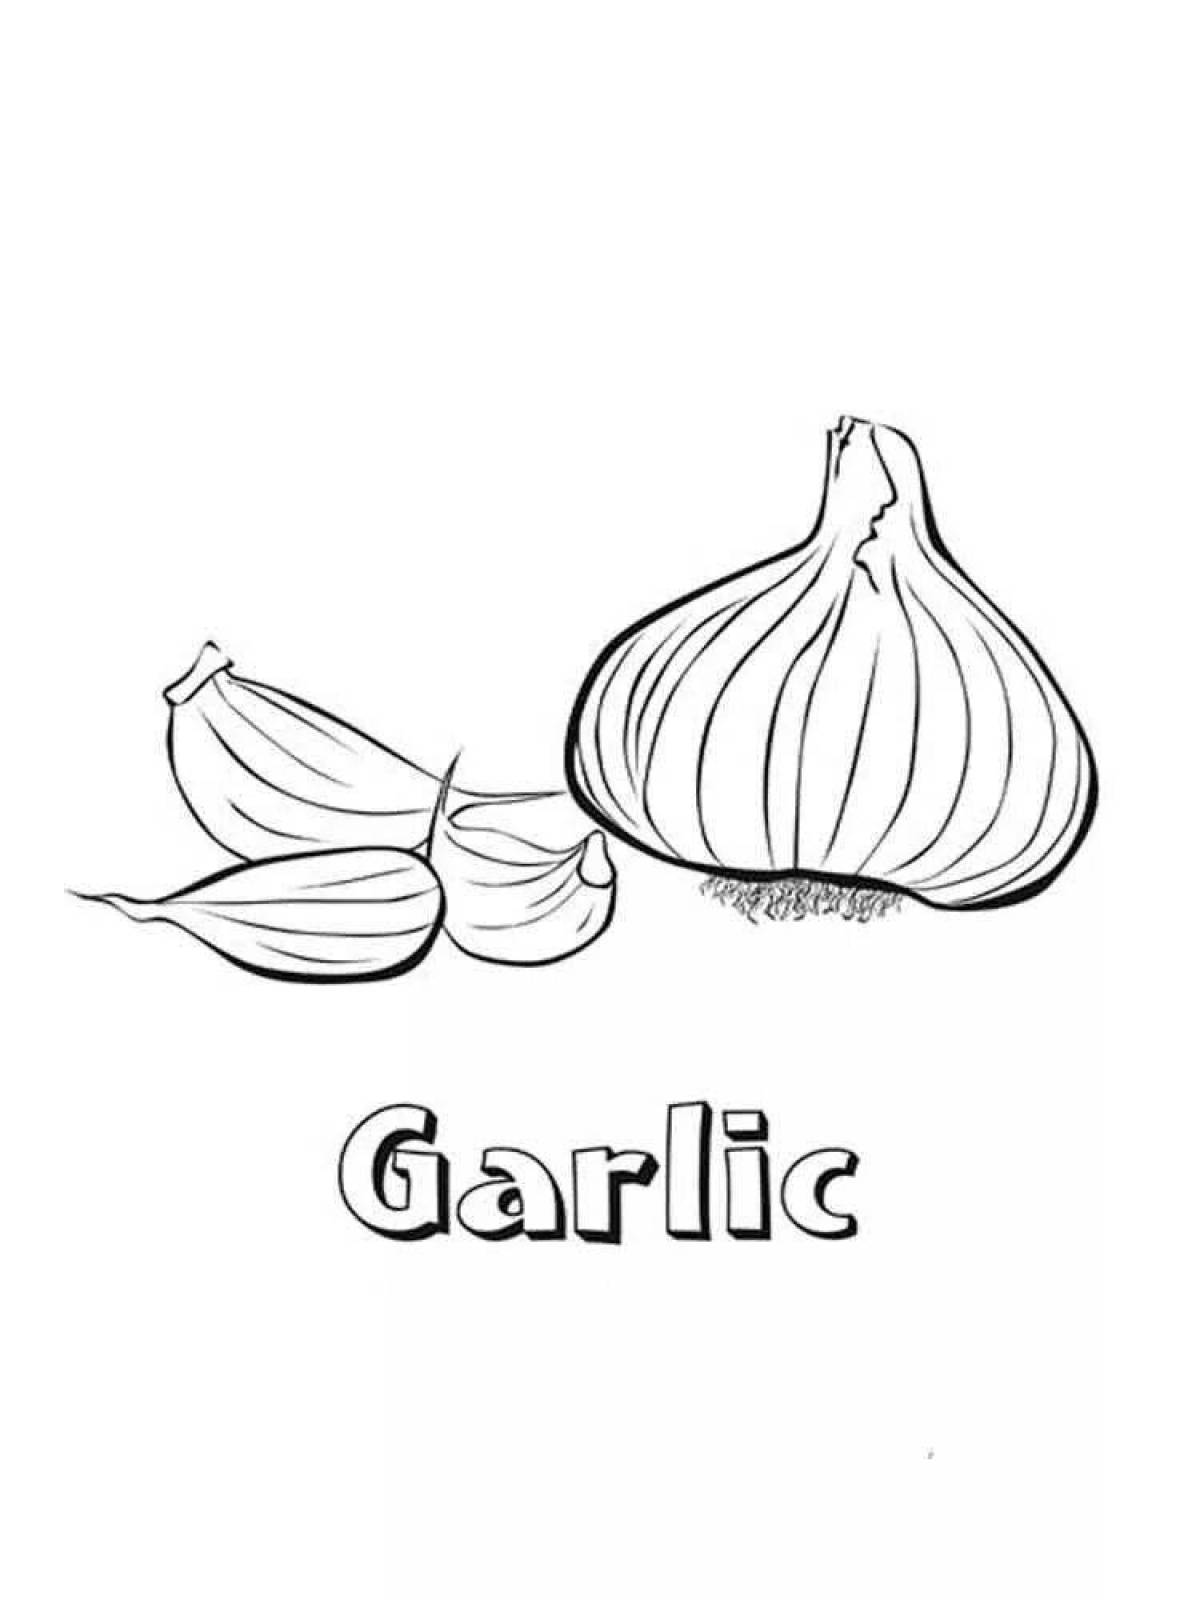 Great garlic coloring book